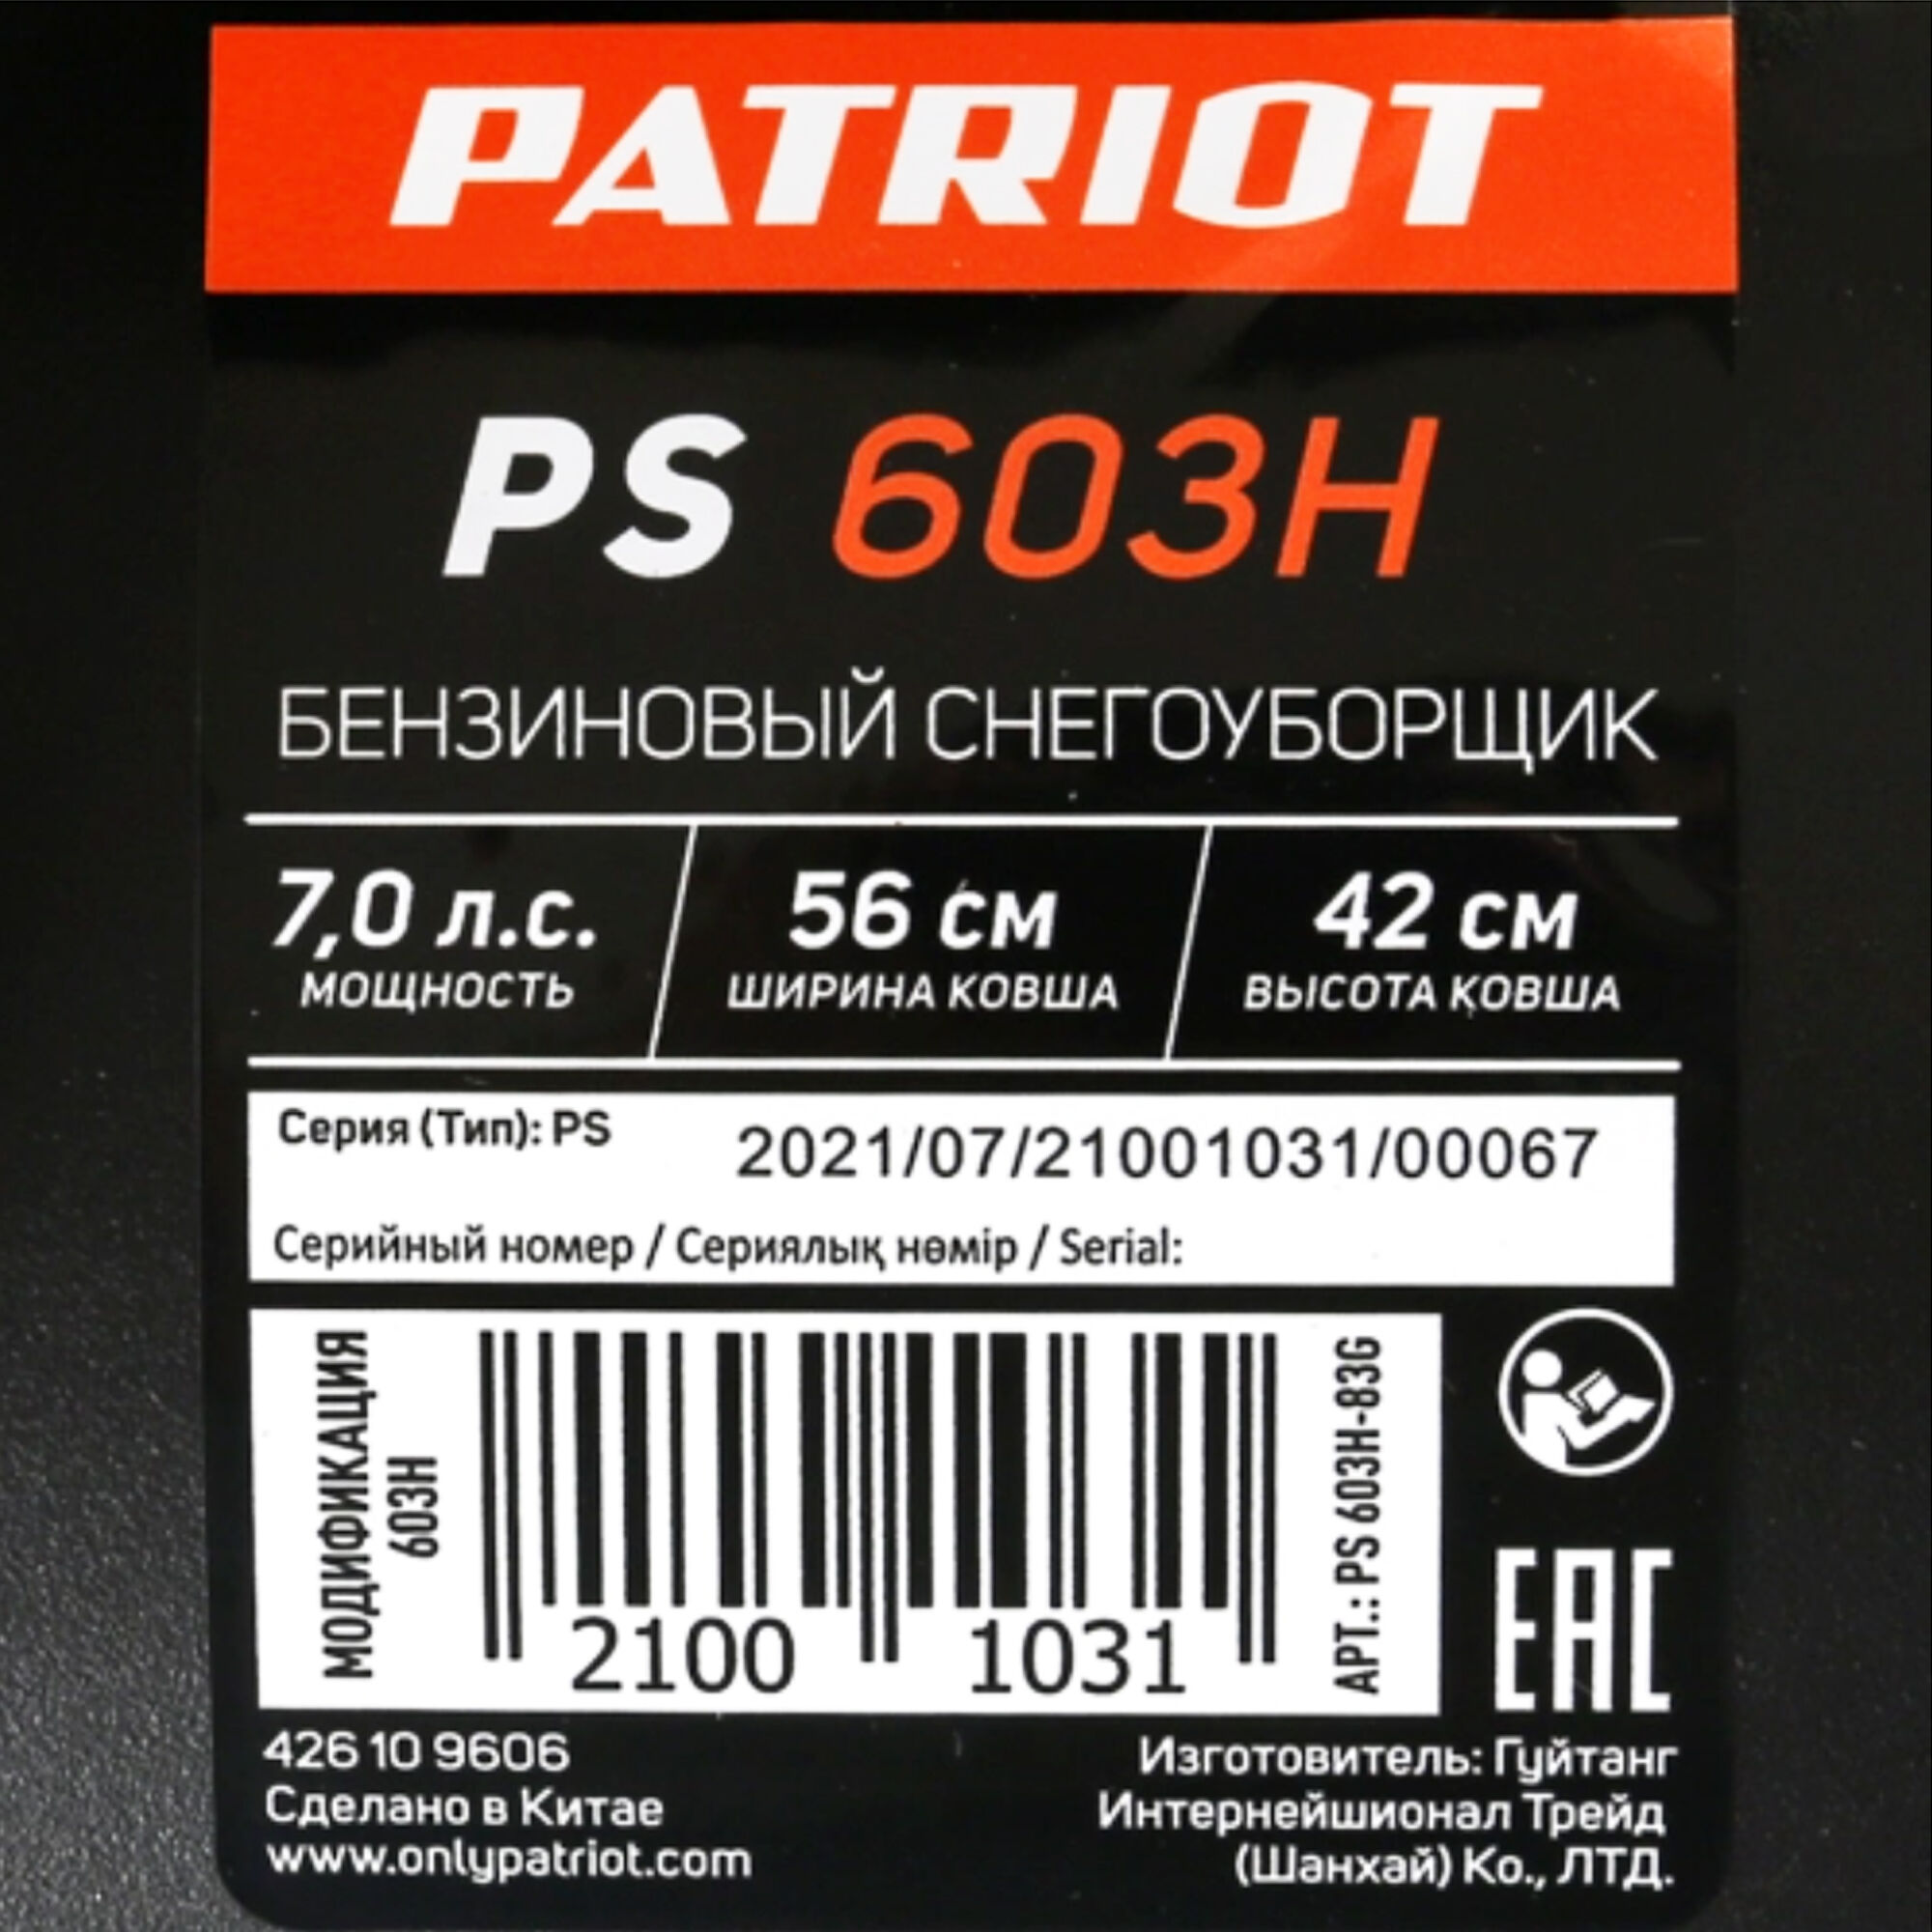 Пс 603. Patriot 603h. Снегоуборщик Patriot PS 603.